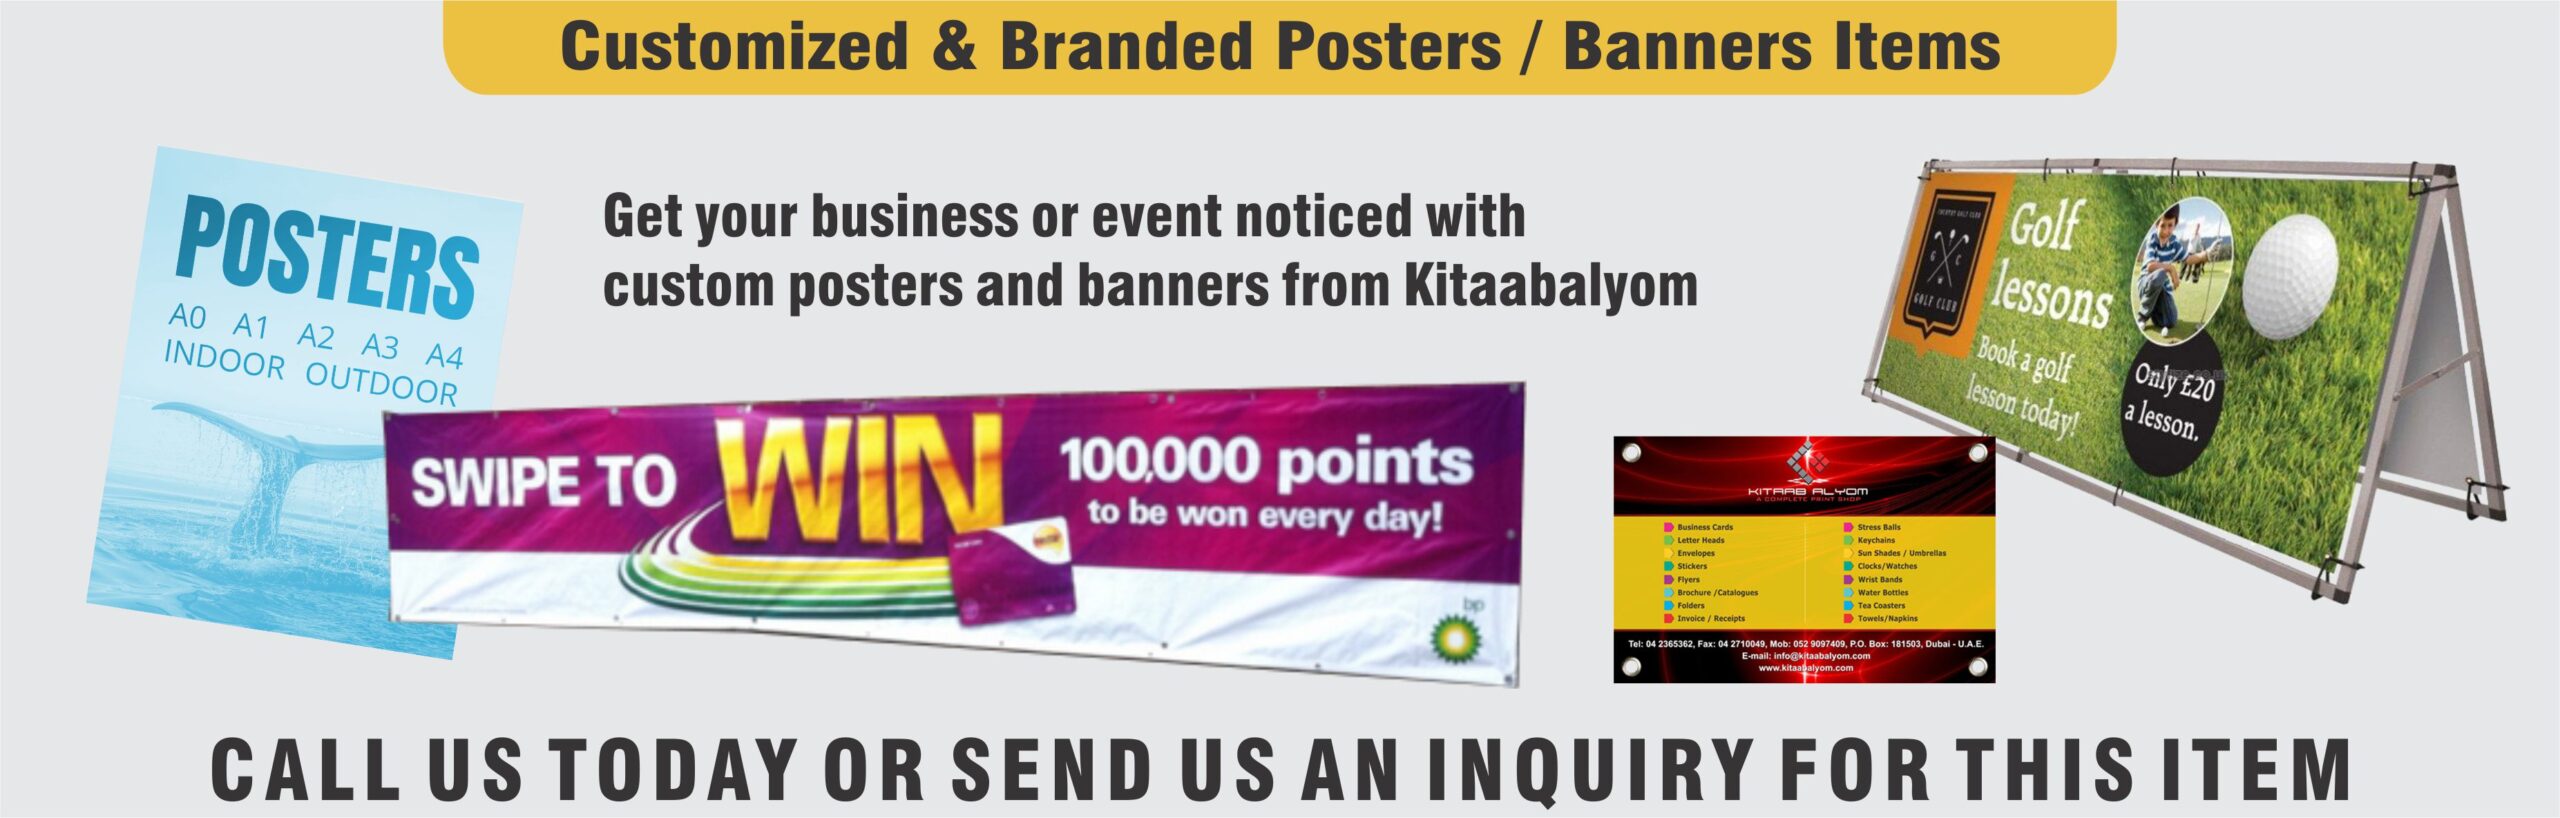 Banners Printing in Dubai, Poster Printing in Dubai, Banners & Posters